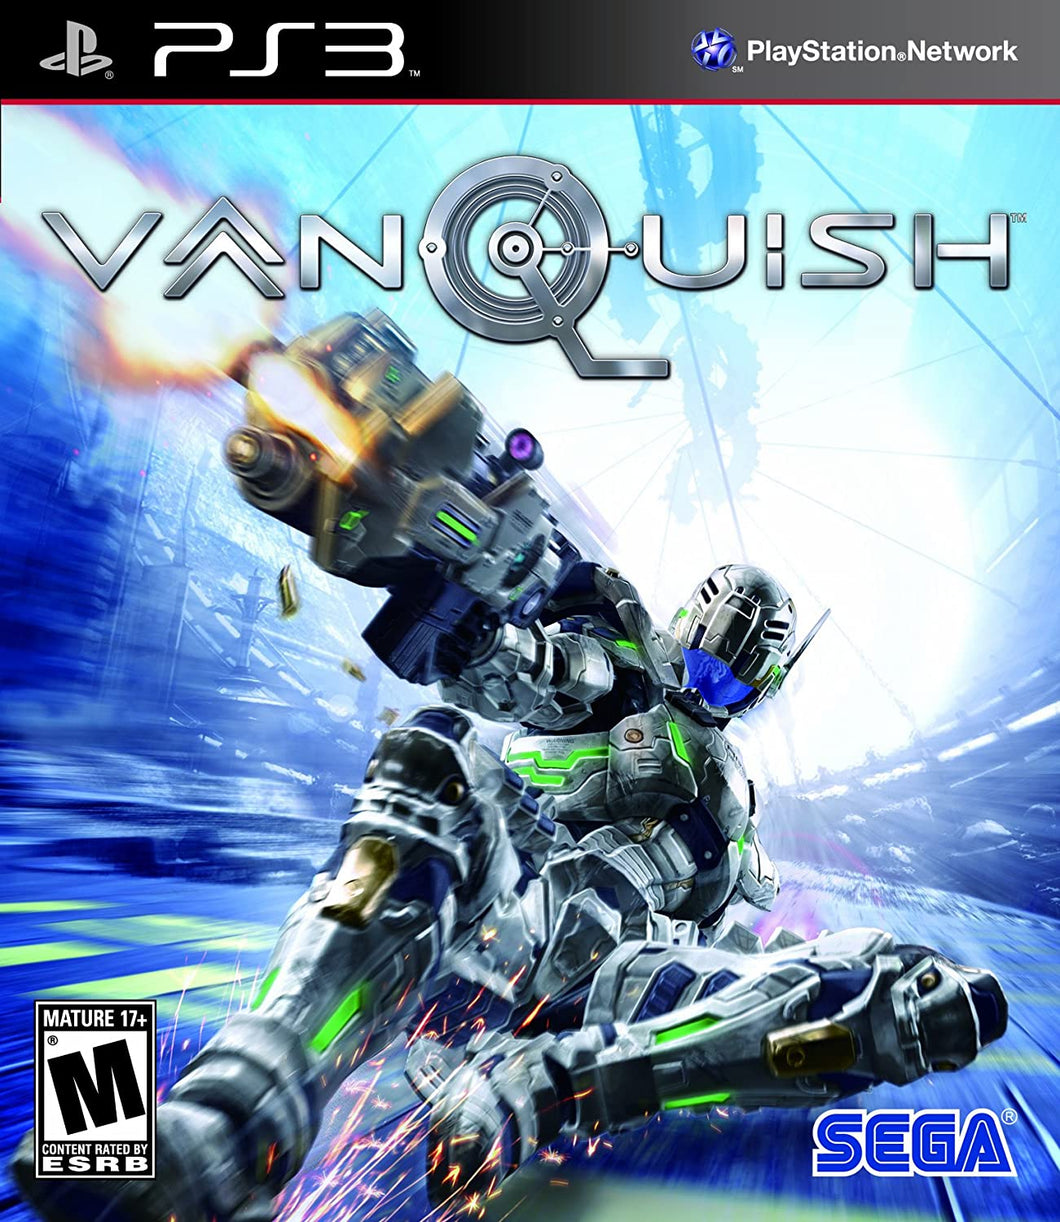 Vanquish Playstation 3